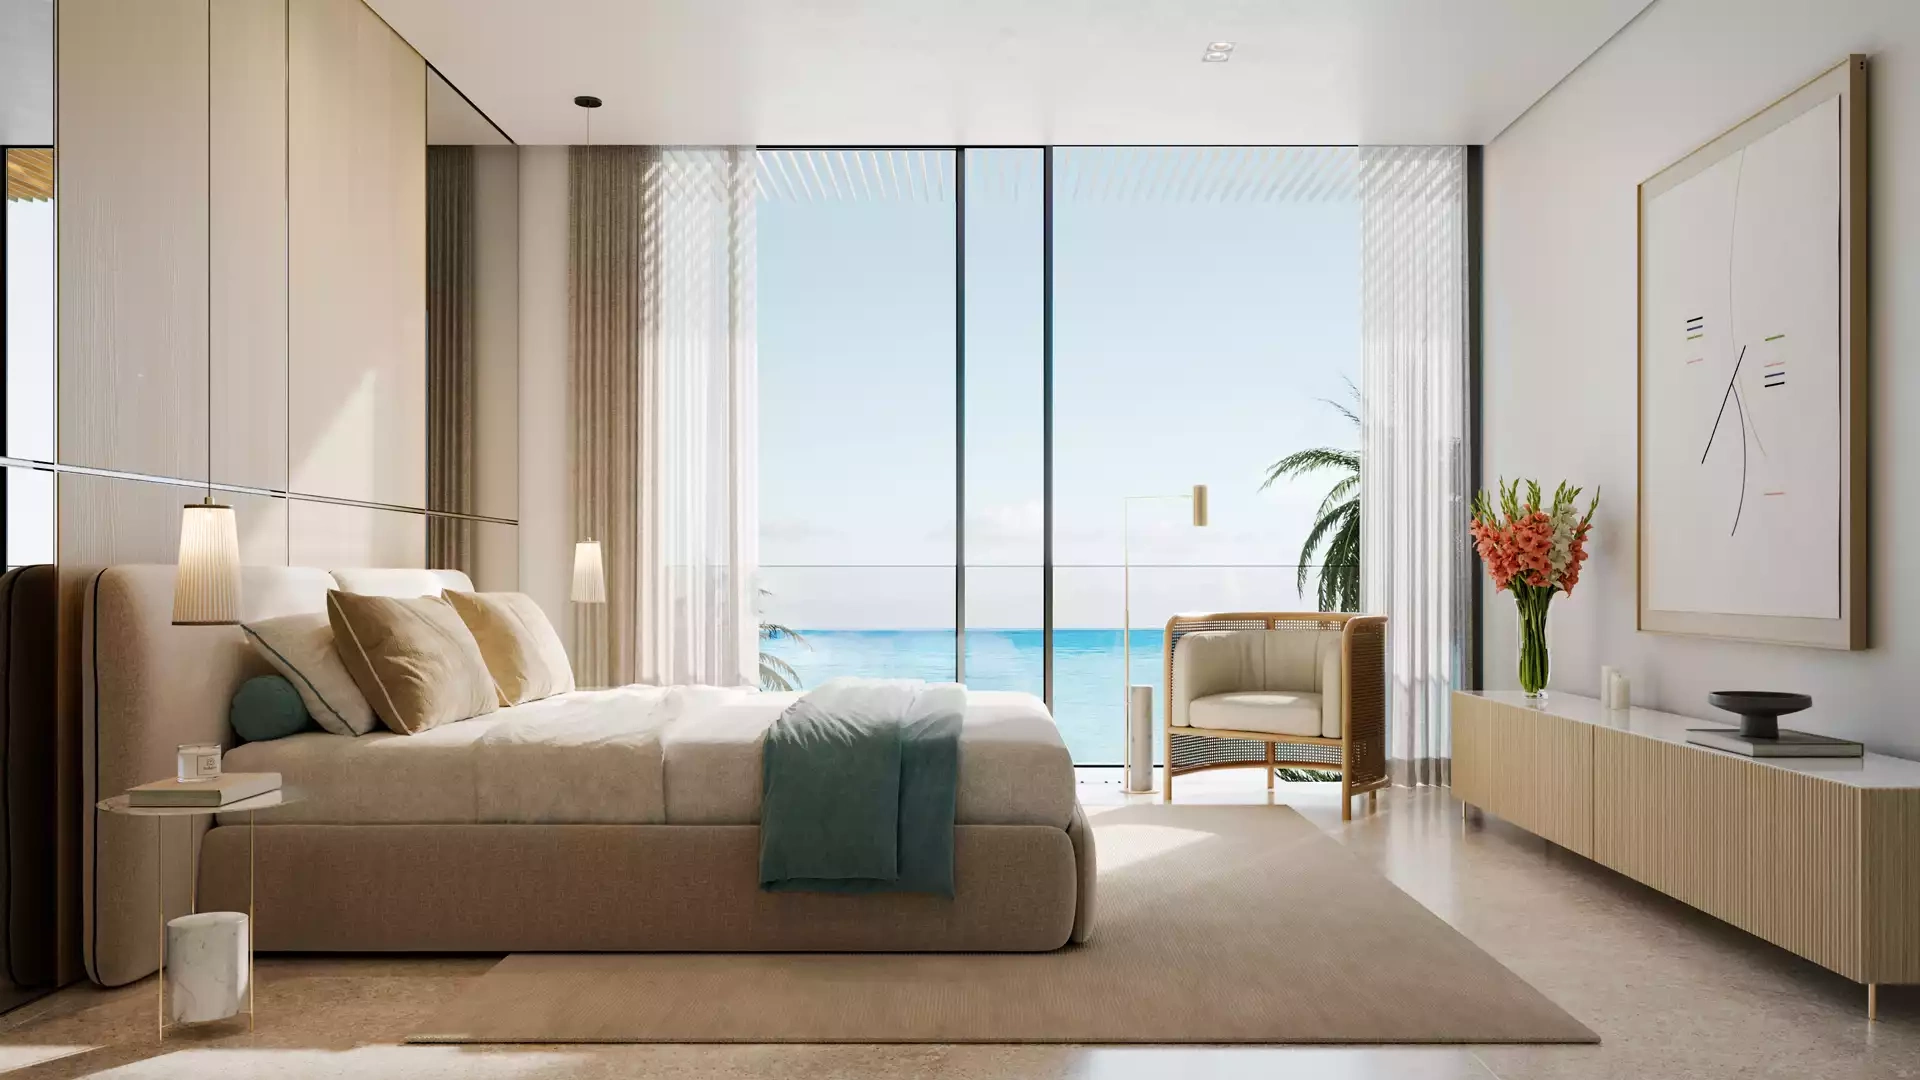 Edge-Realty-شقة فاخرة للبيع في مشروع ريكسوس ريزيدنس بجزر دبي